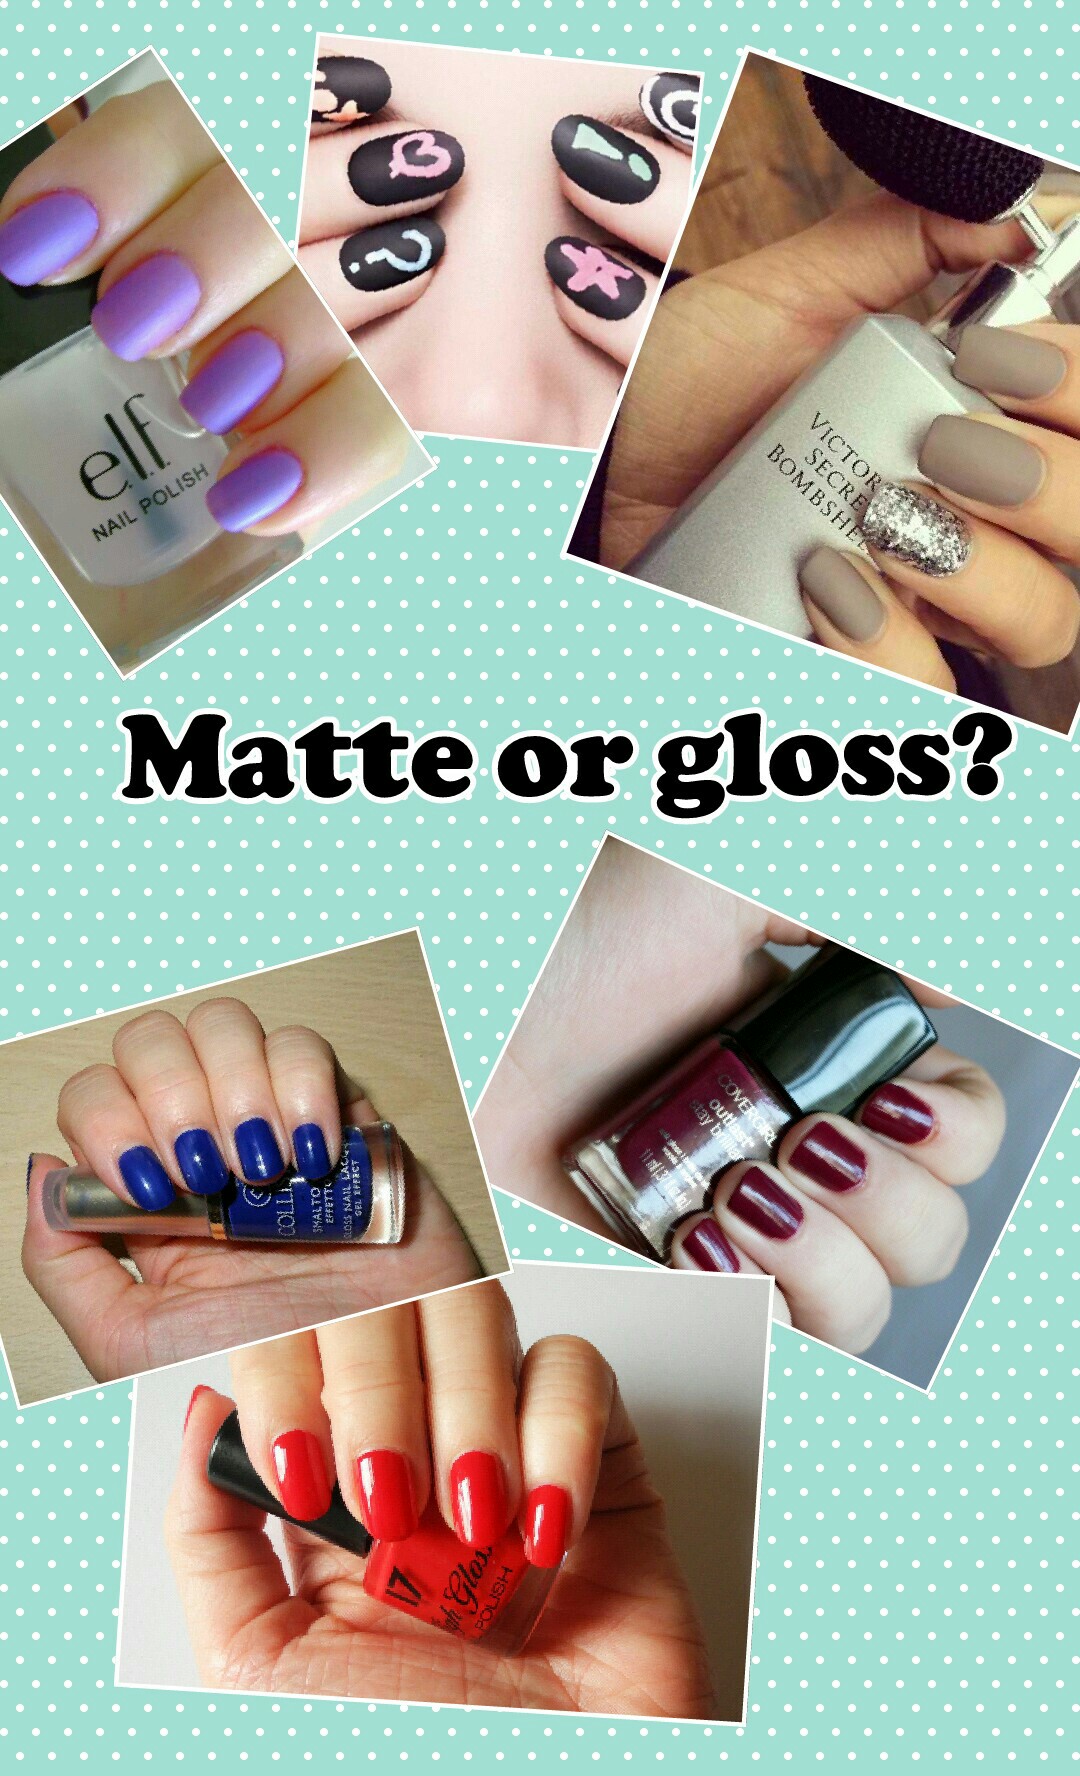 Matte or gloss?